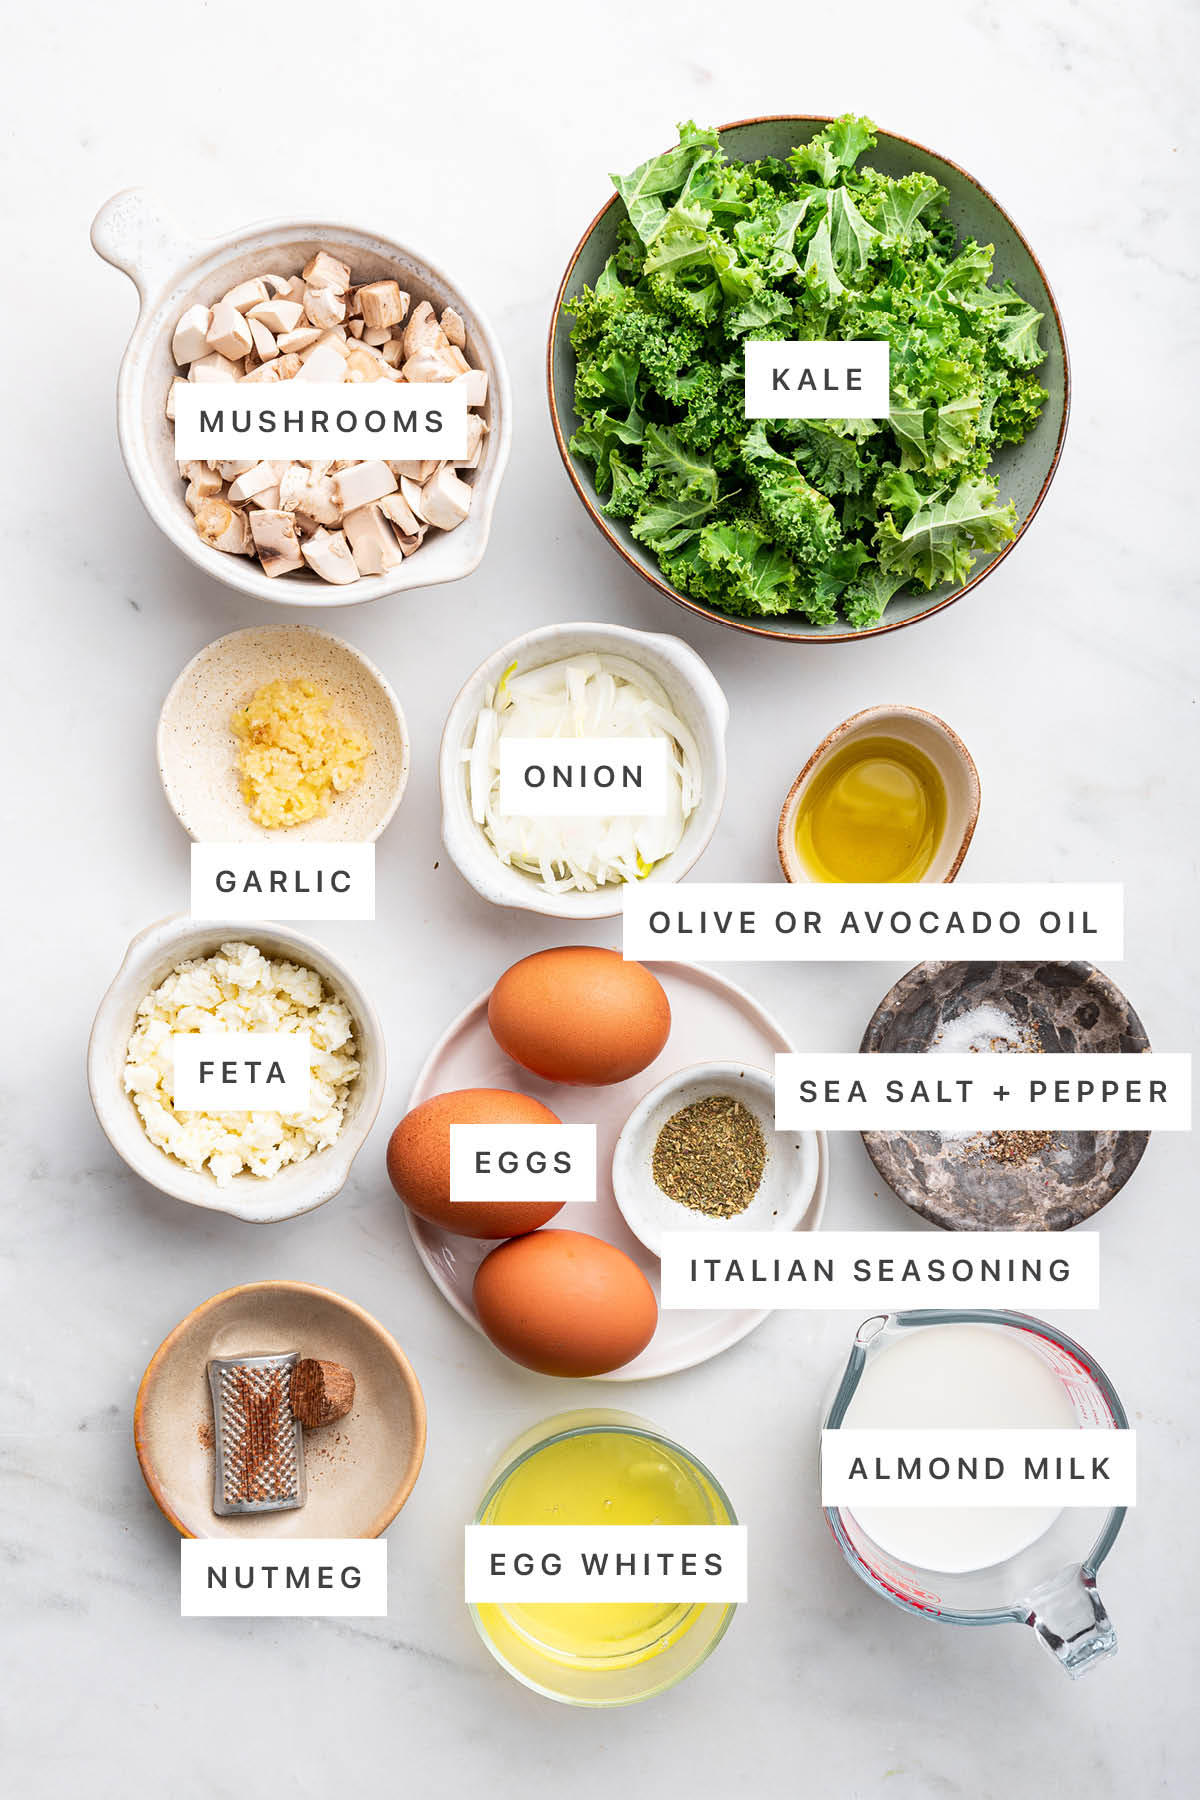 Ingredients measured out to make Kale and Feta Crustless Quiche: mushrooms, kale, garlic, onion, oil, feta, eggs, salt, pepper, Italian seasoning, nutmeg, egg whites and almond milk.